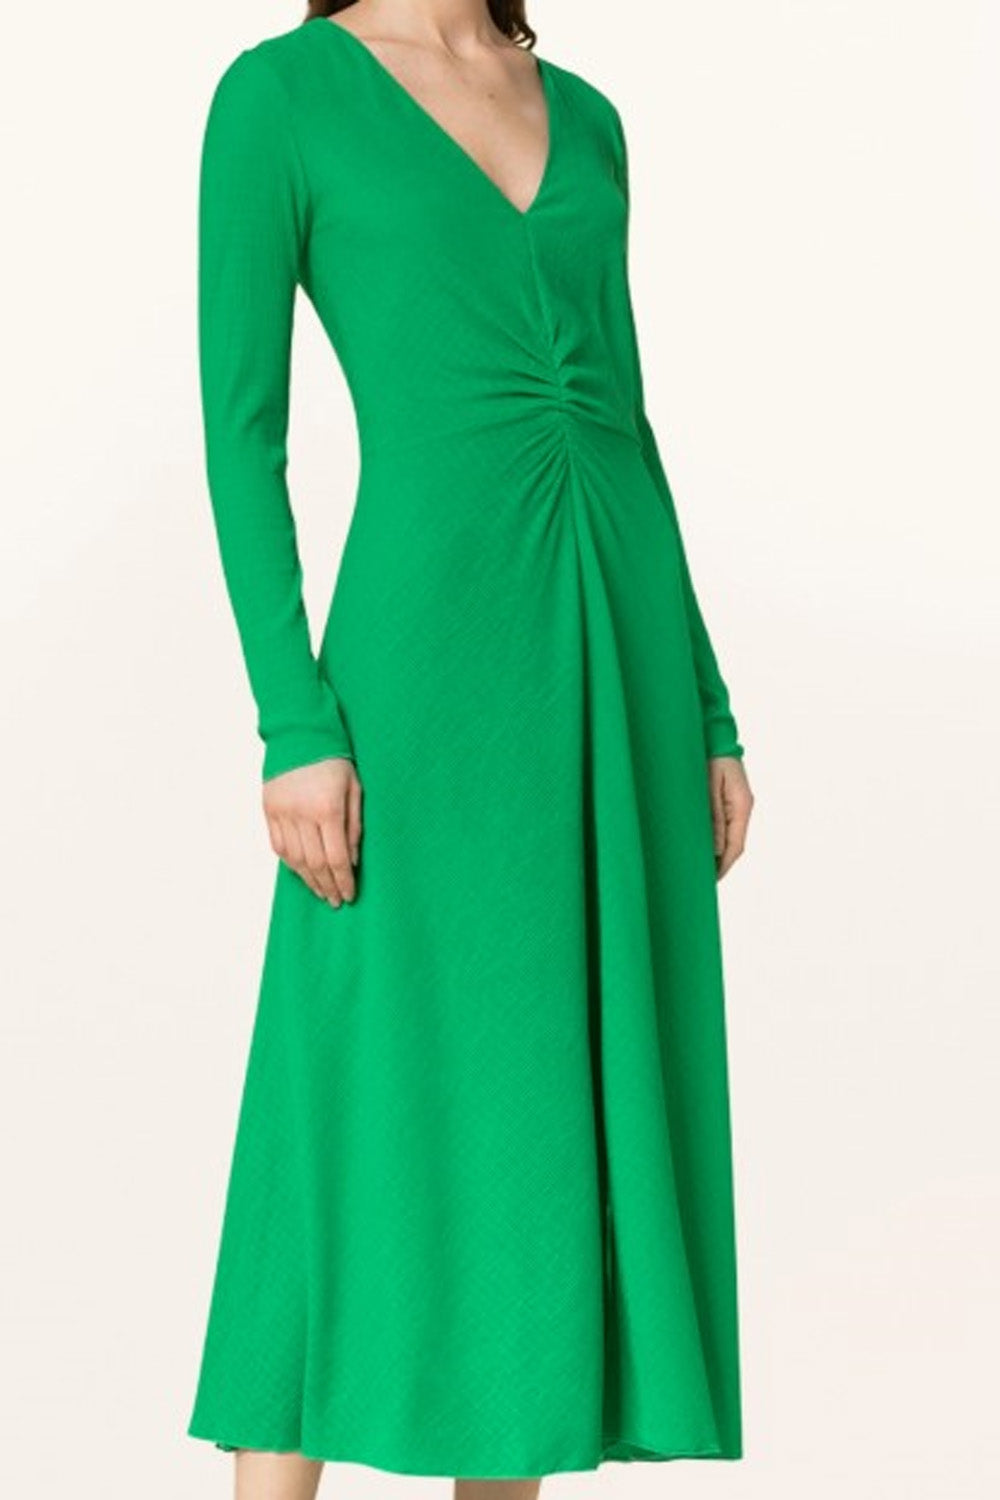 Elements Green Dress